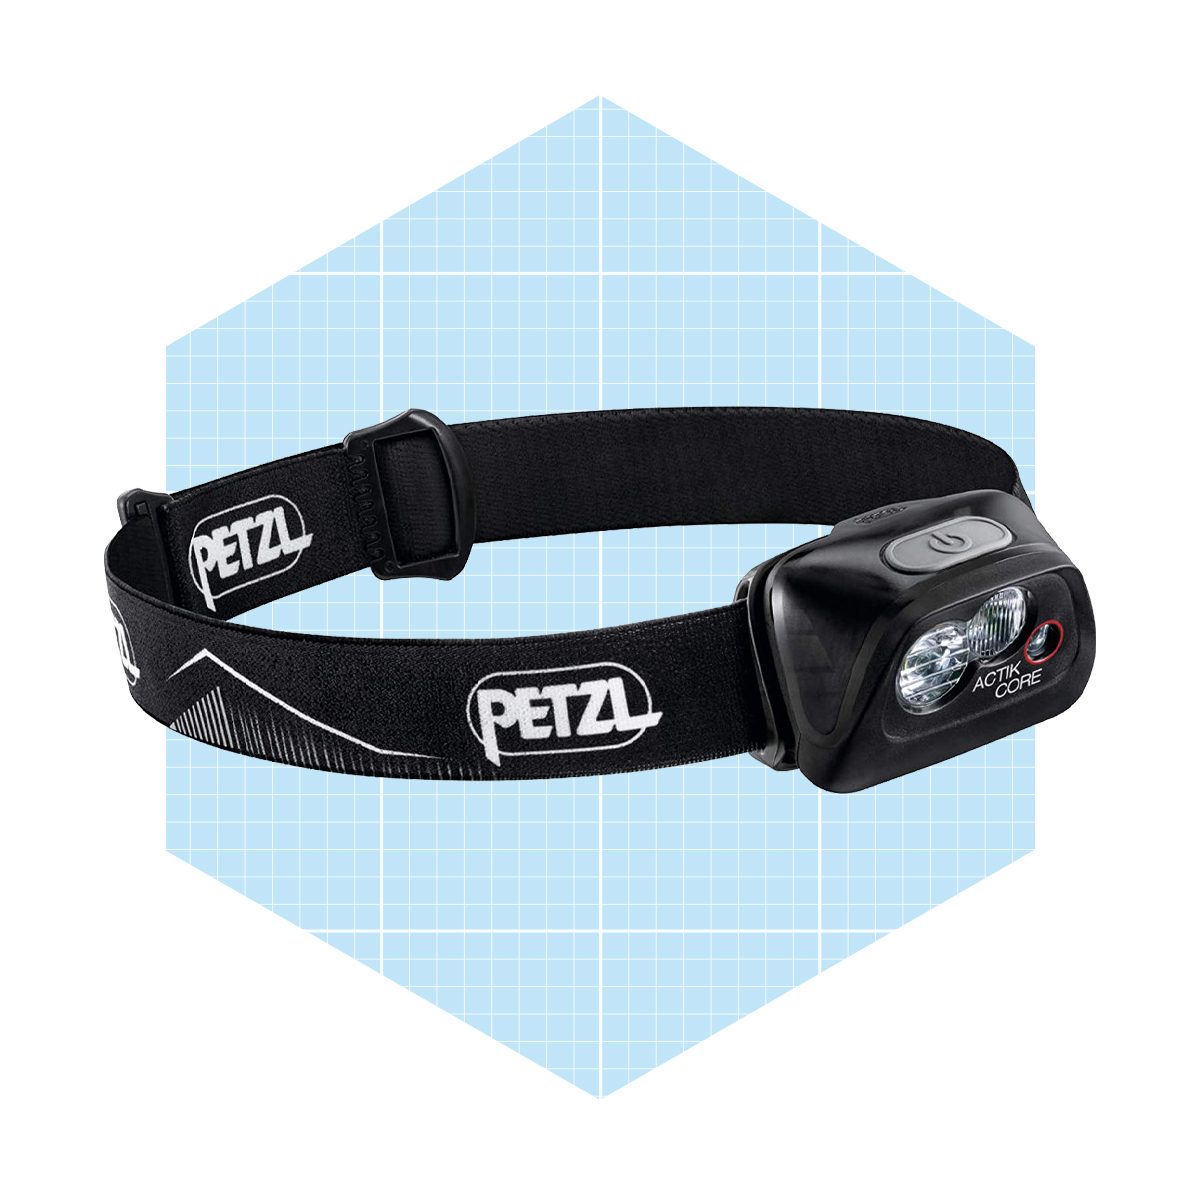 Petzl Actik Core Headlamp Ecomm Amazon.com